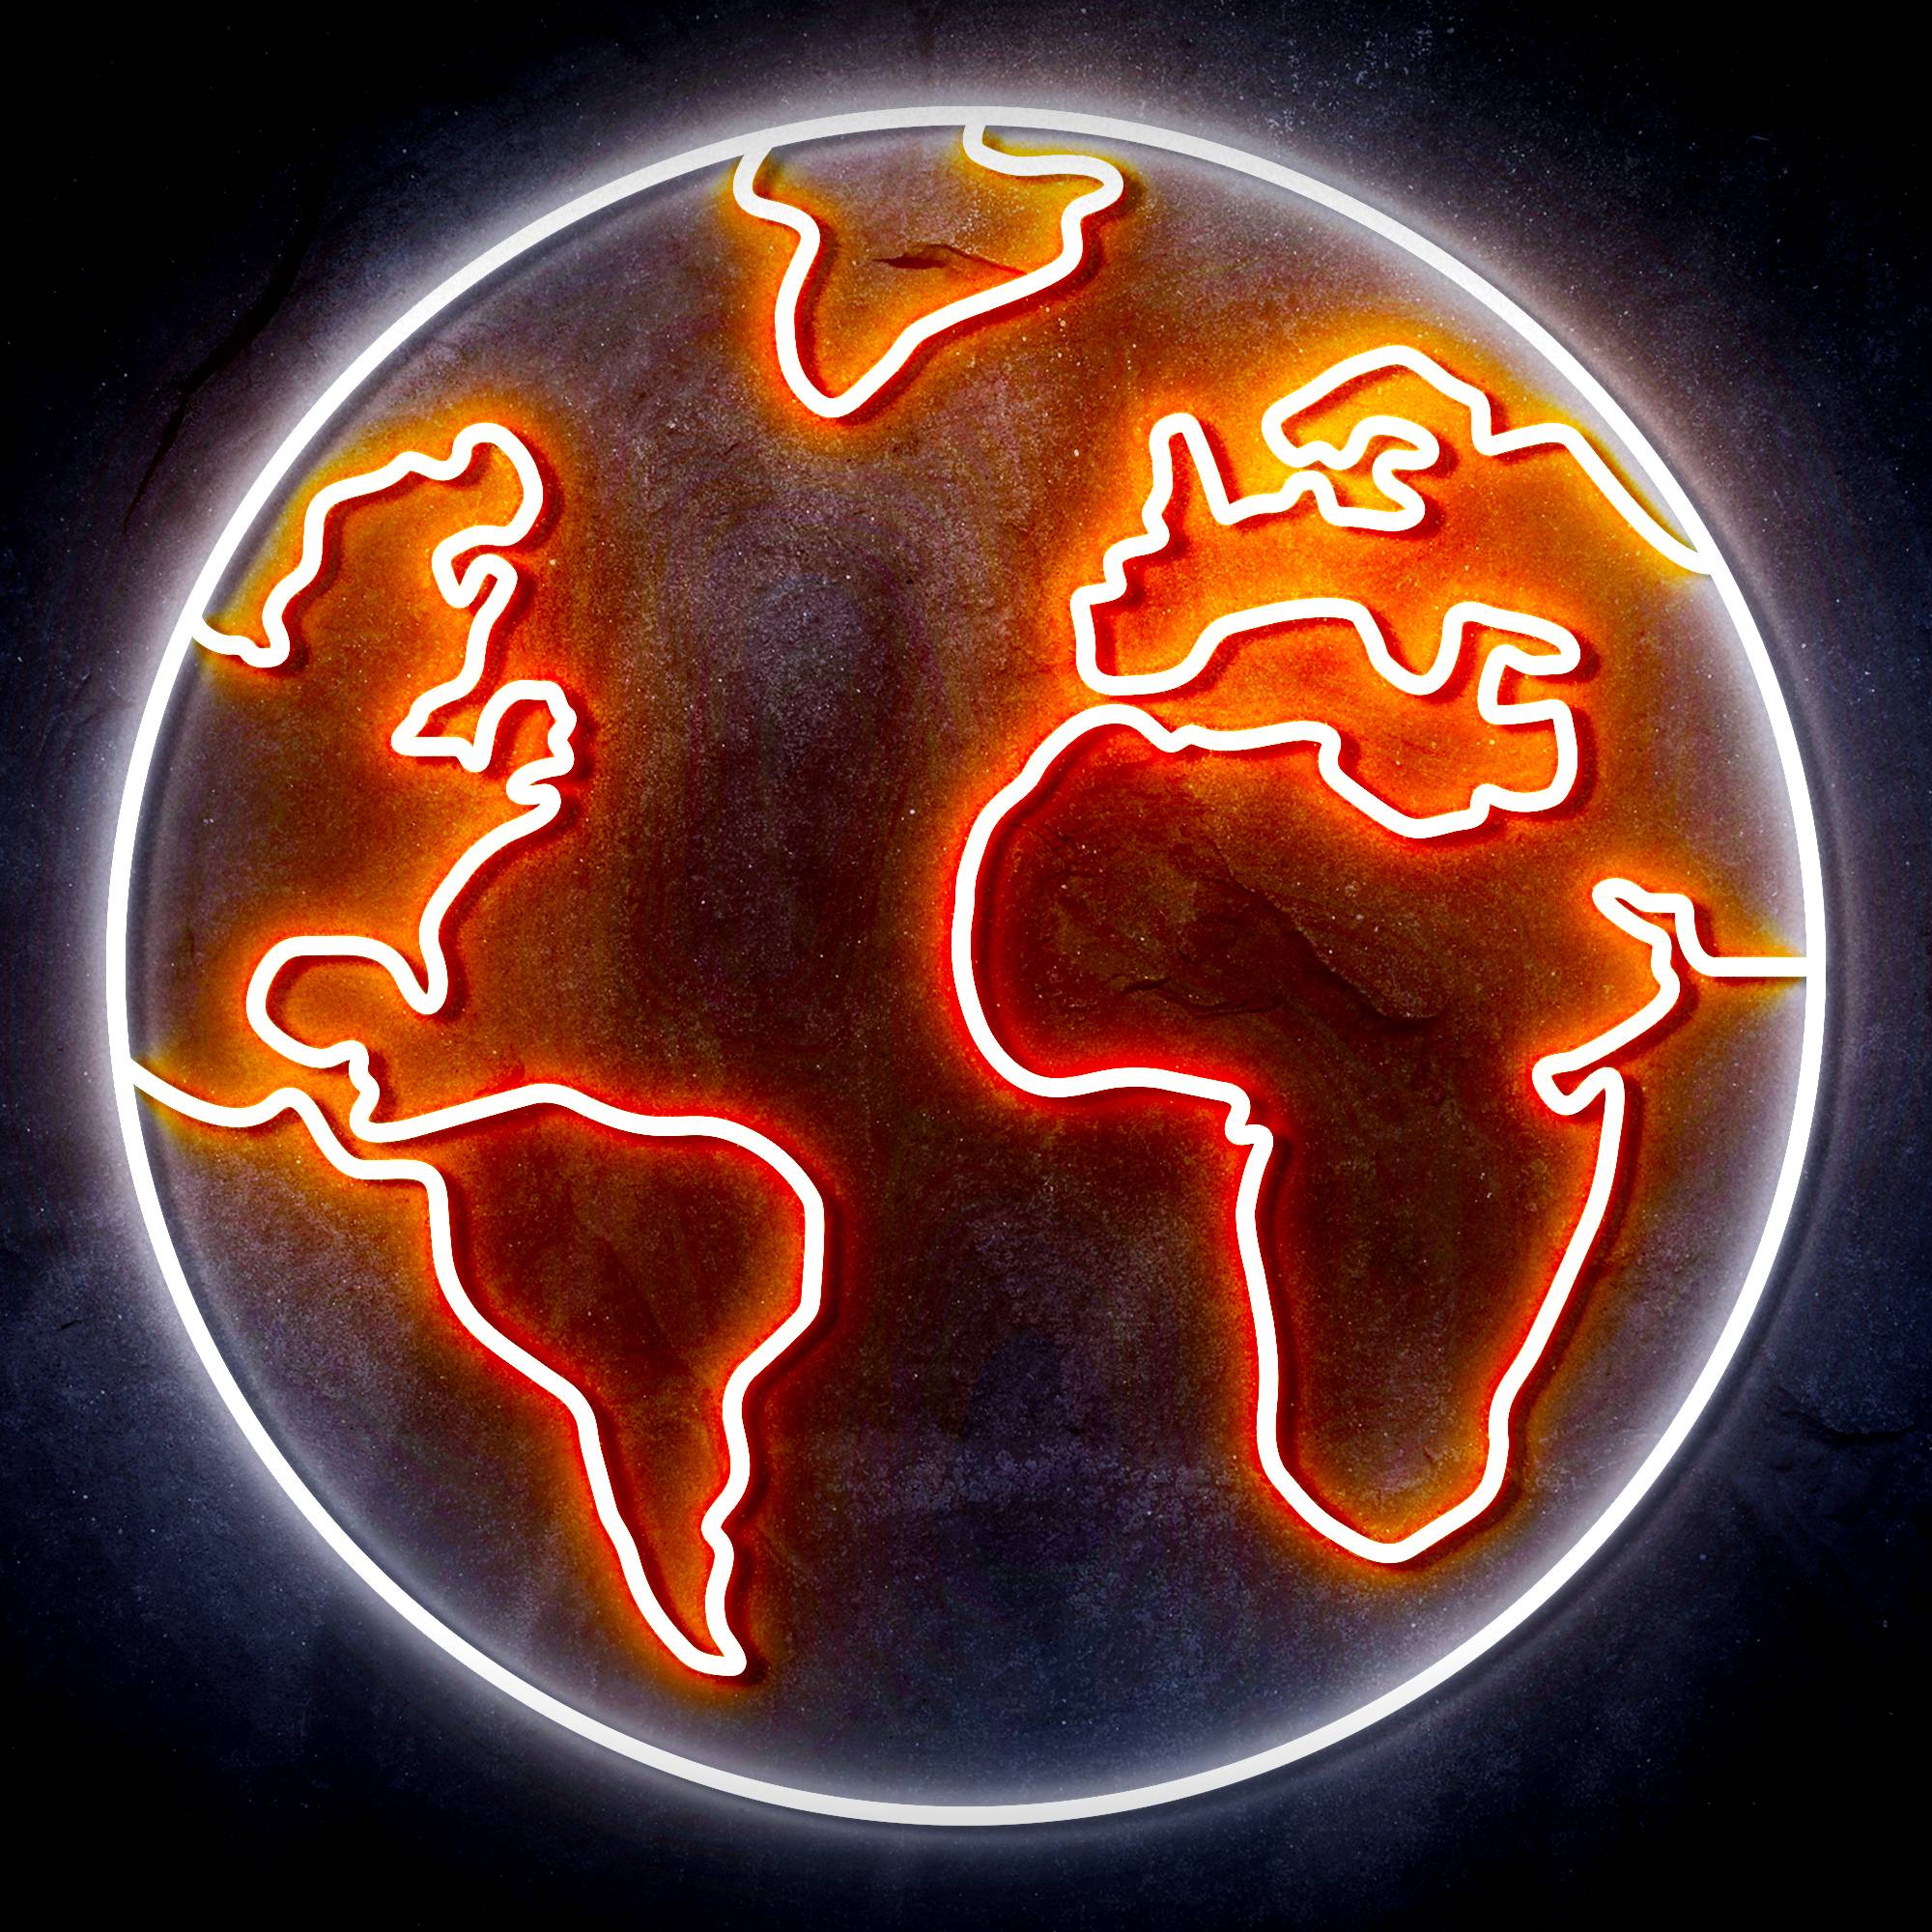 Earth Globe LED Neon Sign